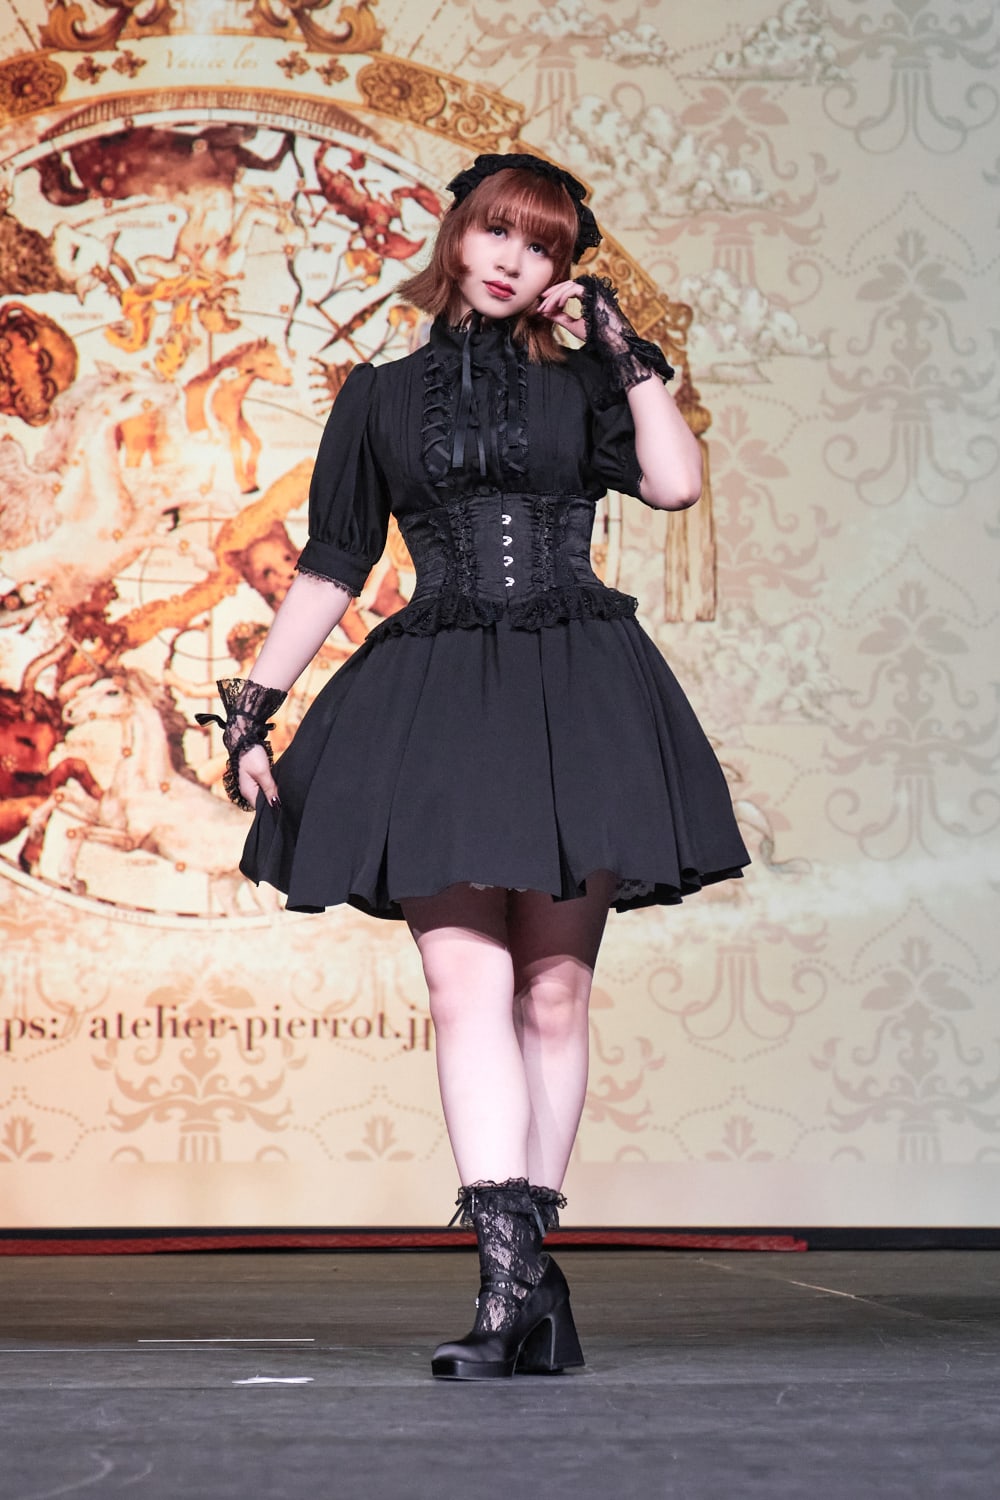 Atelier Pierrot gothic lolita model wearing all black short sleeved dress with black corset - full body standing pose 2.